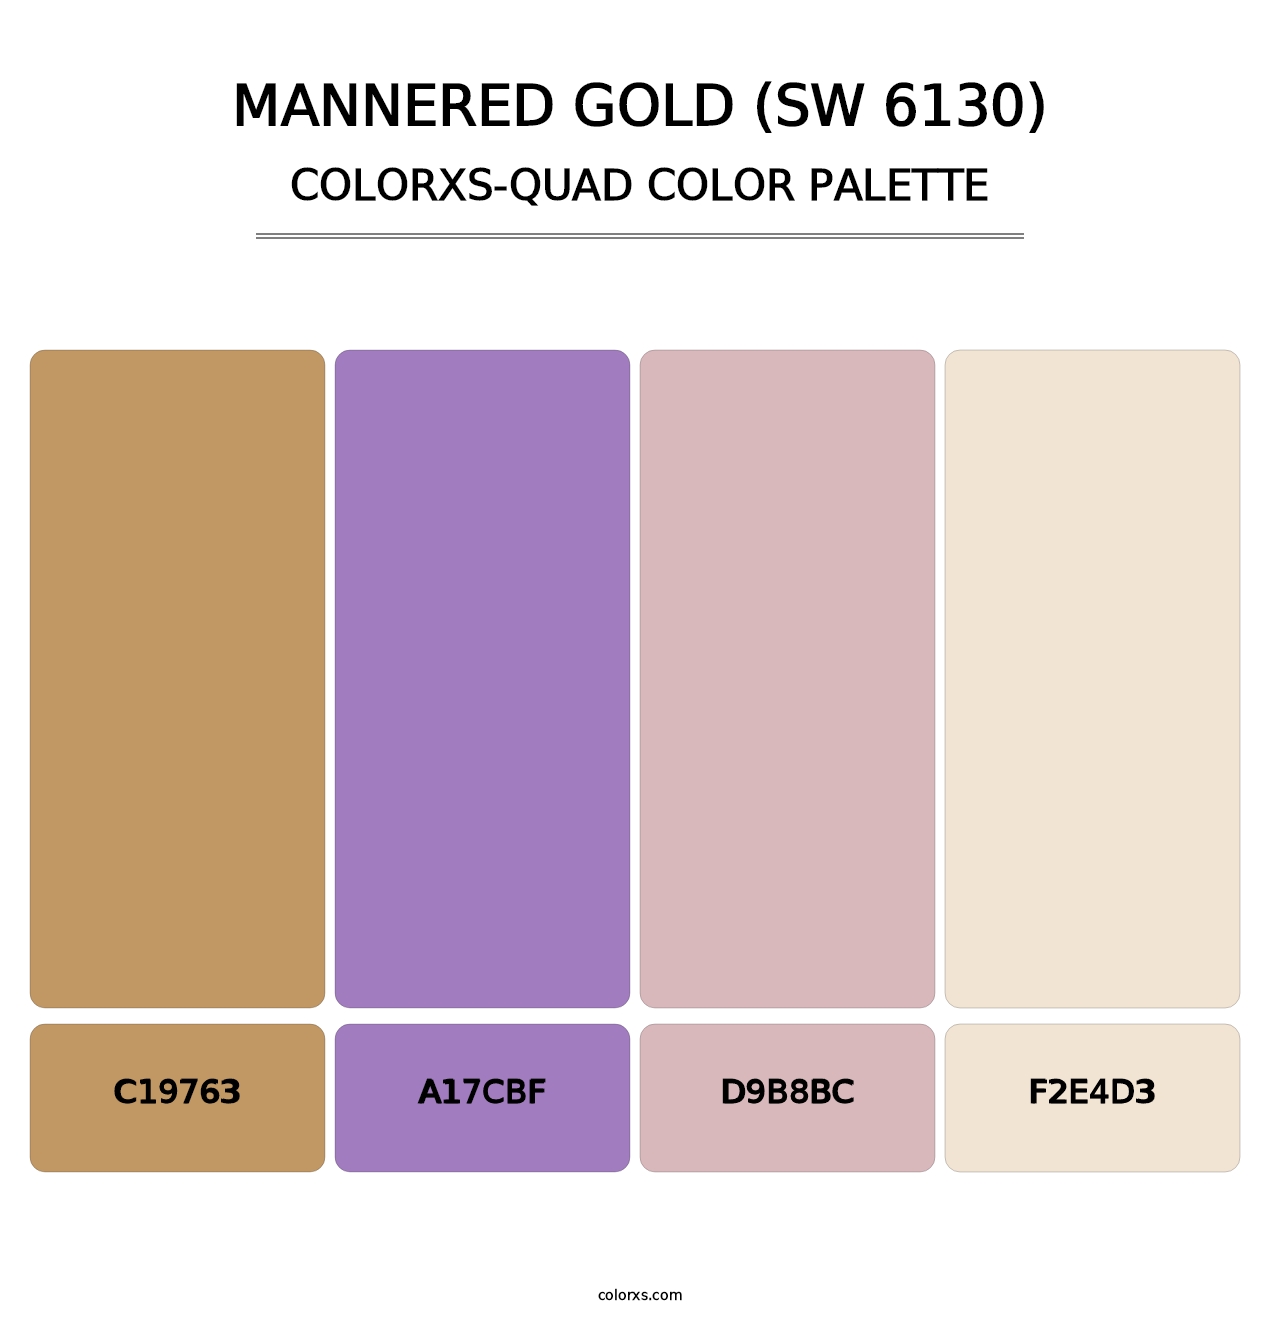 Mannered Gold (SW 6130) - Colorxs Quad Palette